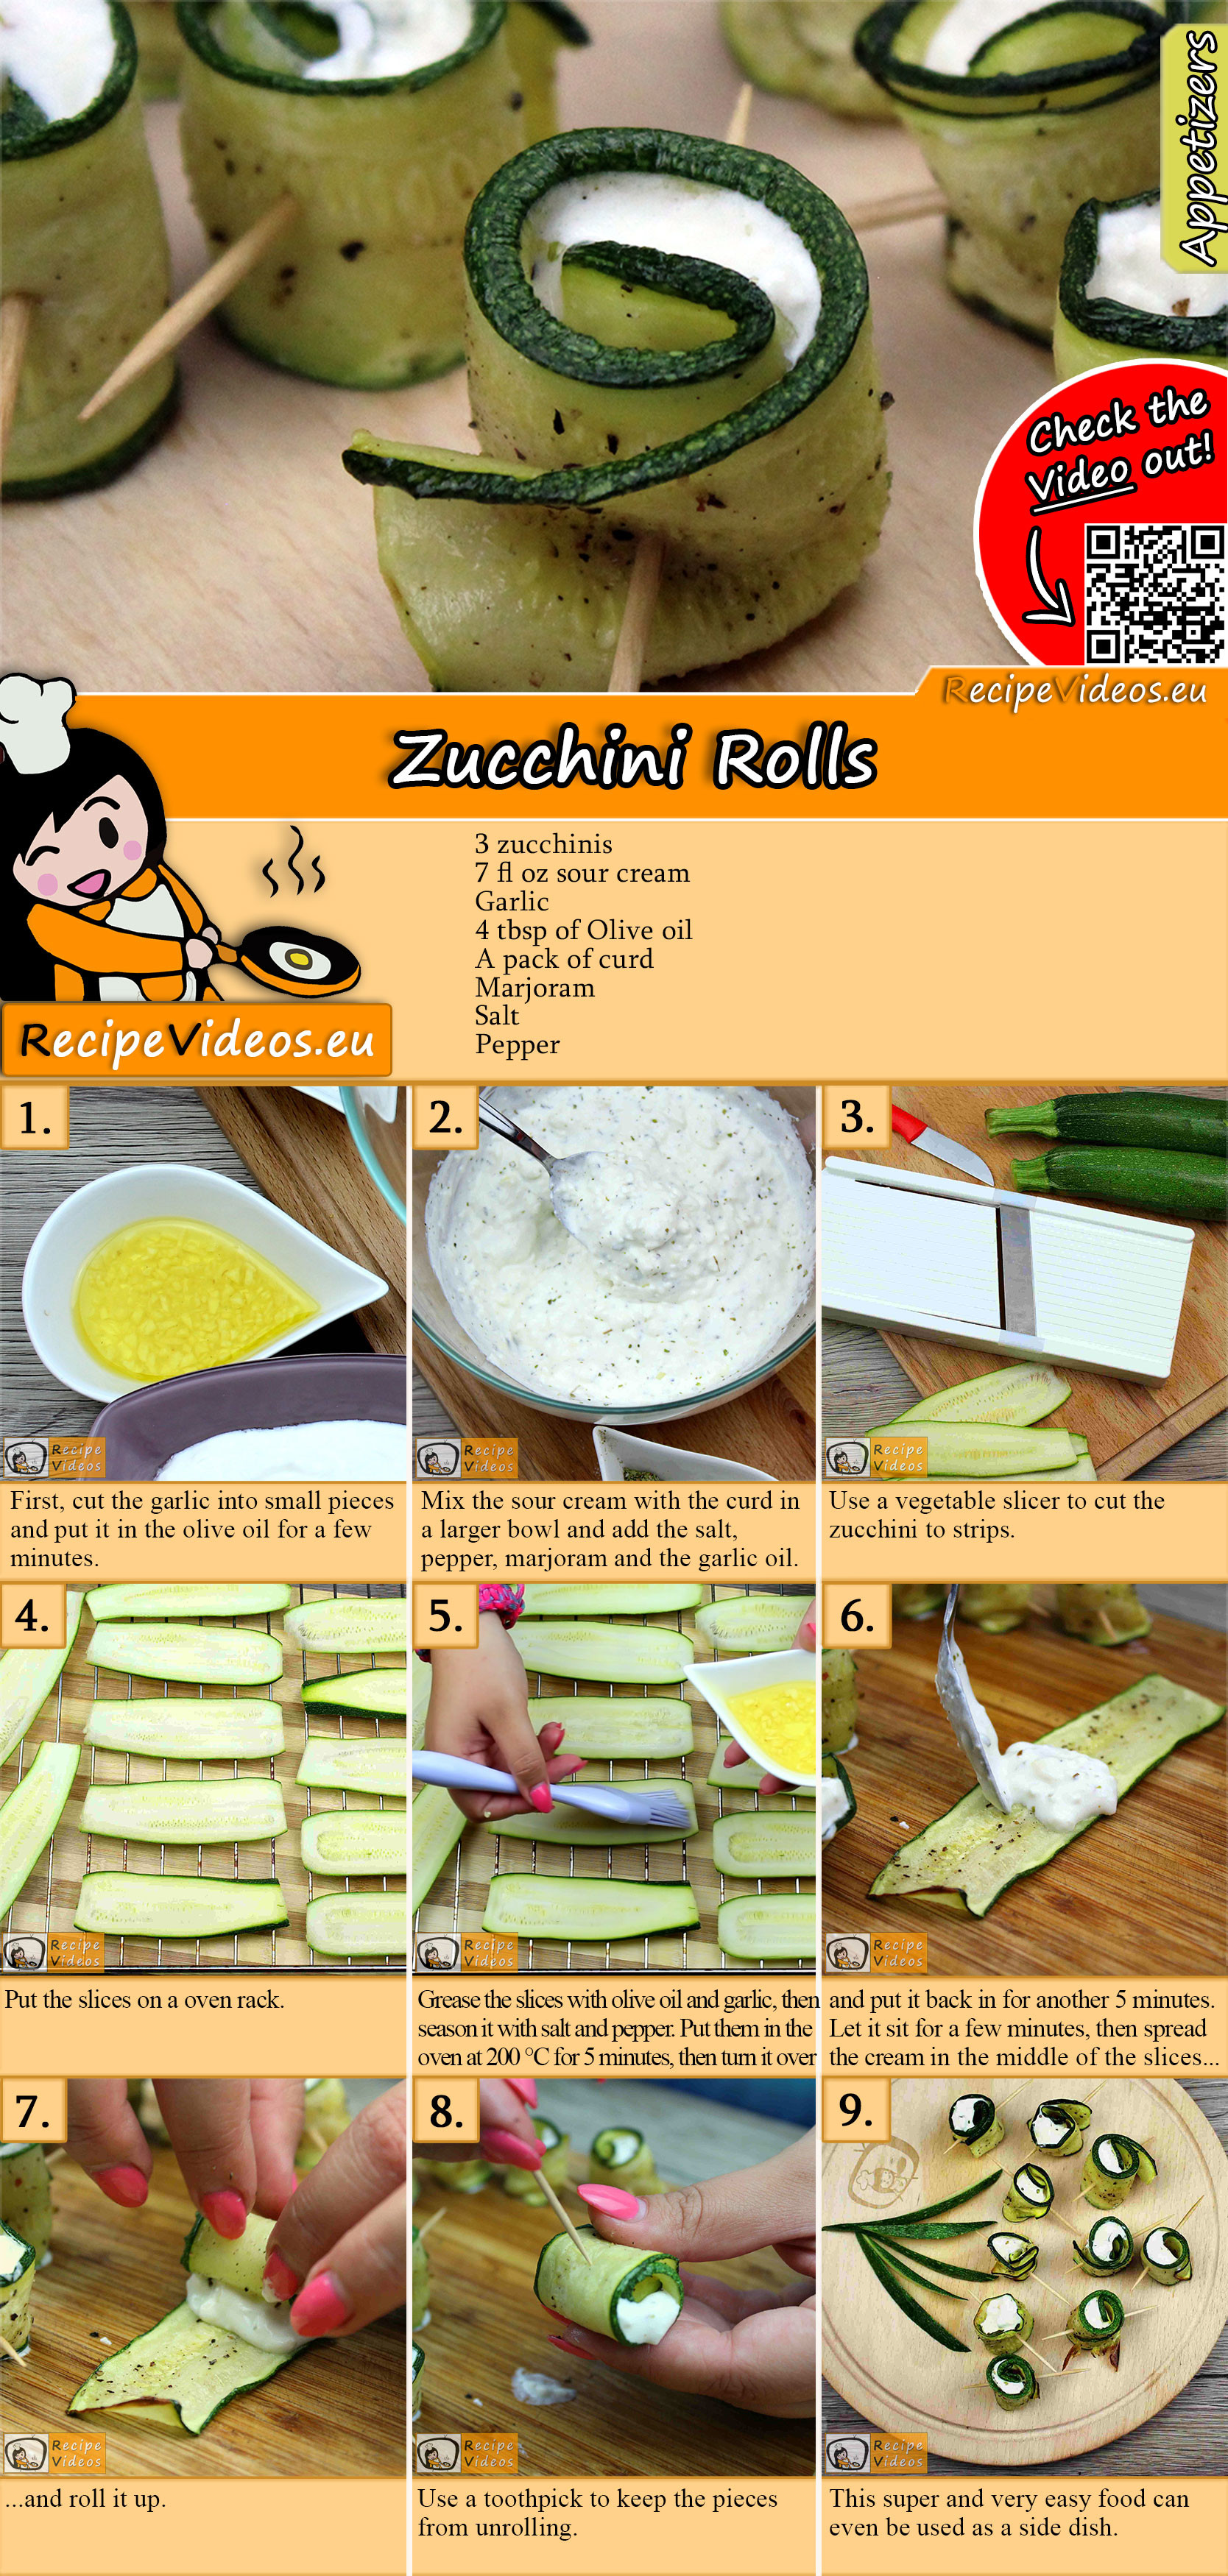 Zucchini rolls recipe with video